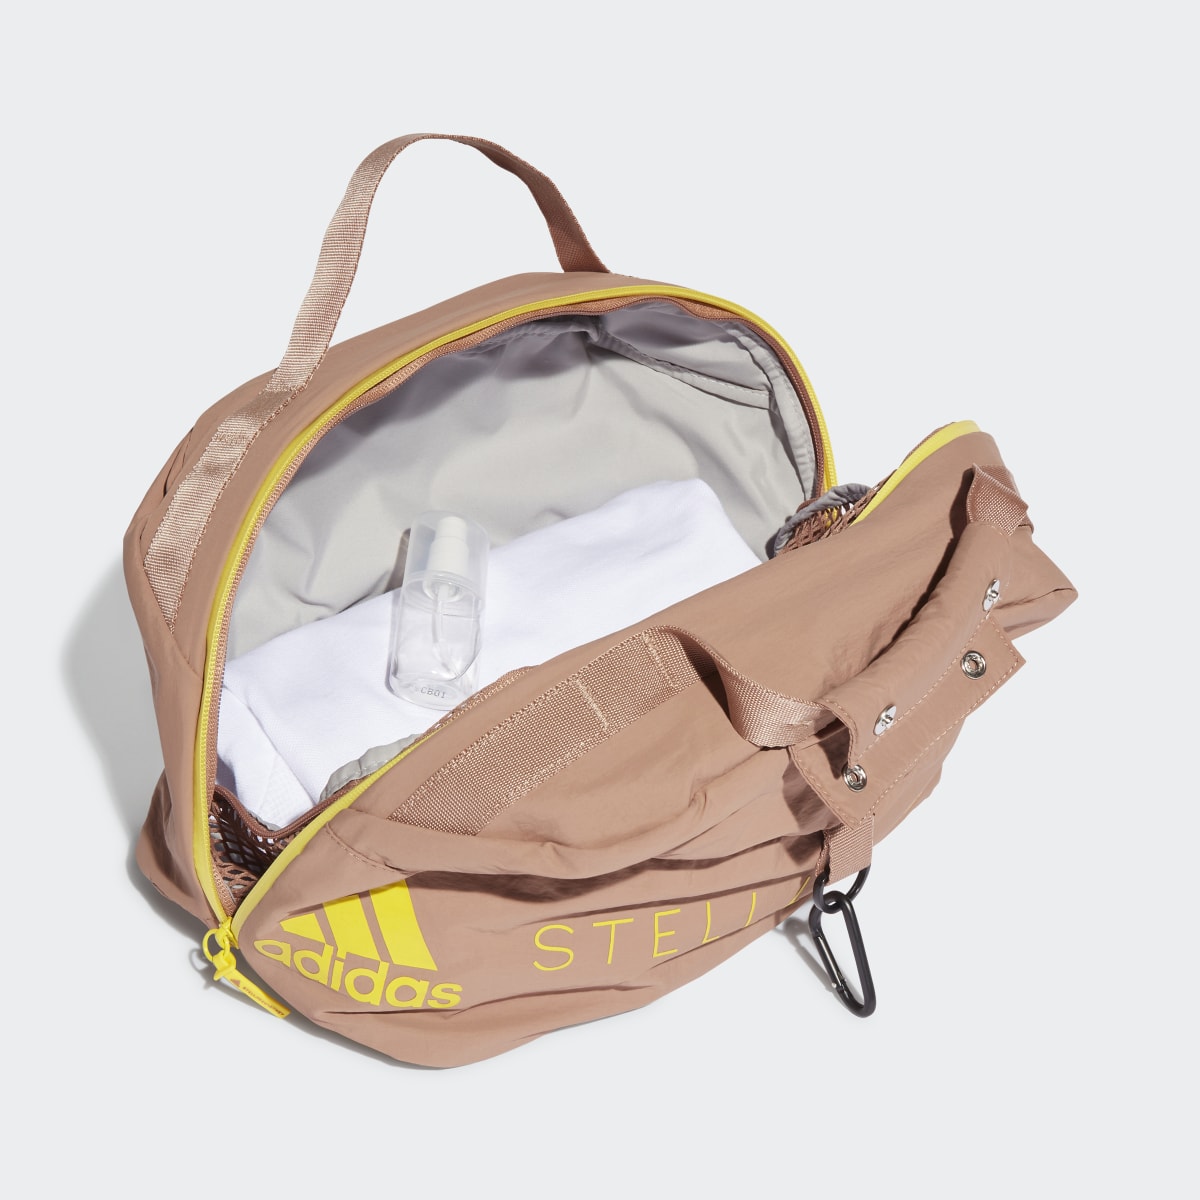 Adidas by Stella McCartney Travel Bag Set. 5